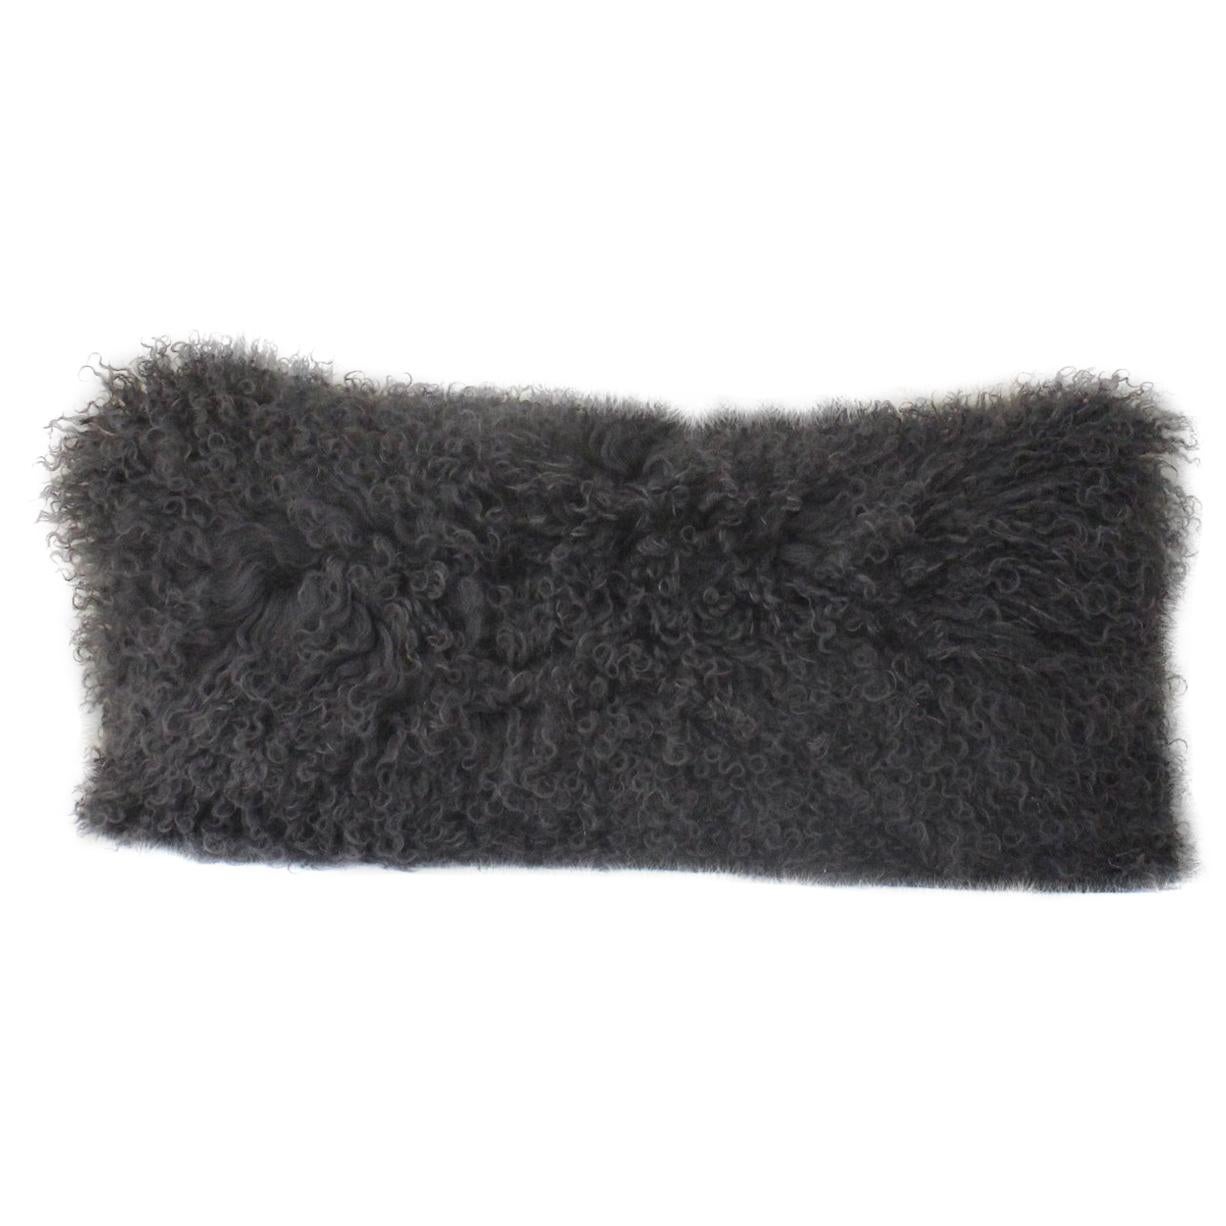 Charcoal Grey Mongolian Fur Pillow - Lumbar Sheepskin pillow For Sale